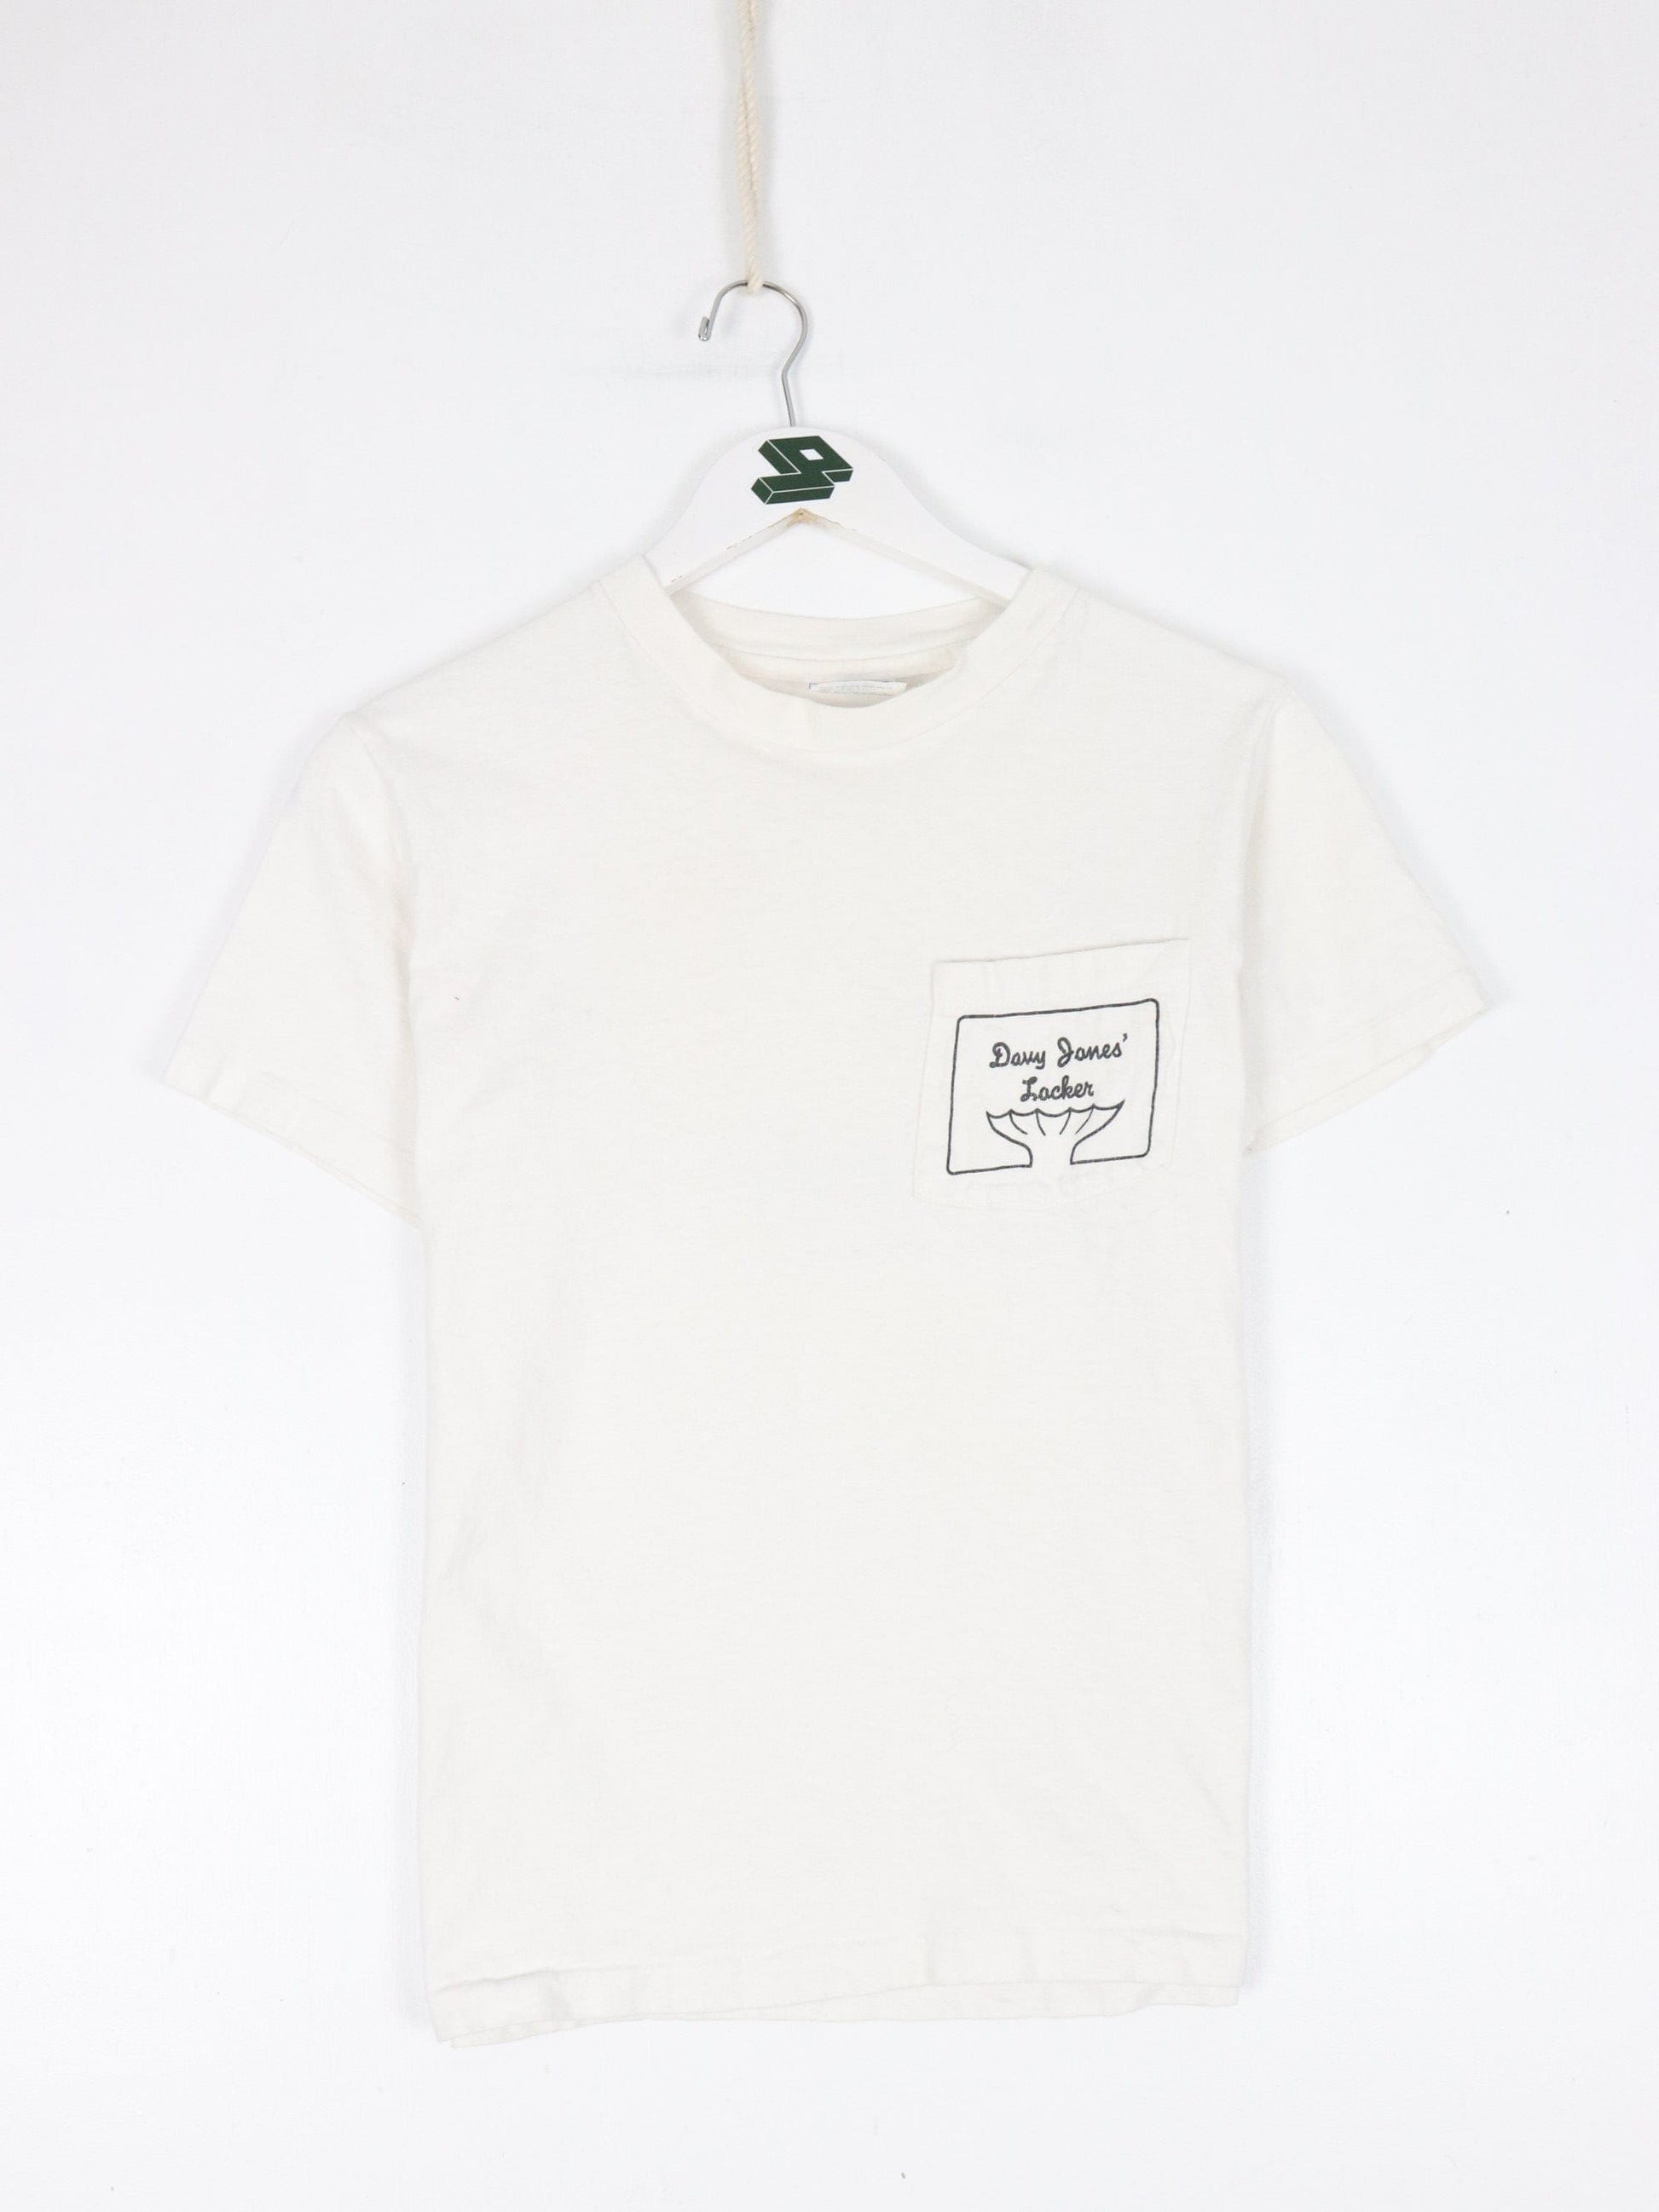 Other T-Shirts & Tank Tops Vintage Davy Jones Locker T Shirt Fits Mens XS White Hawaii Drinking Hanes Beefy